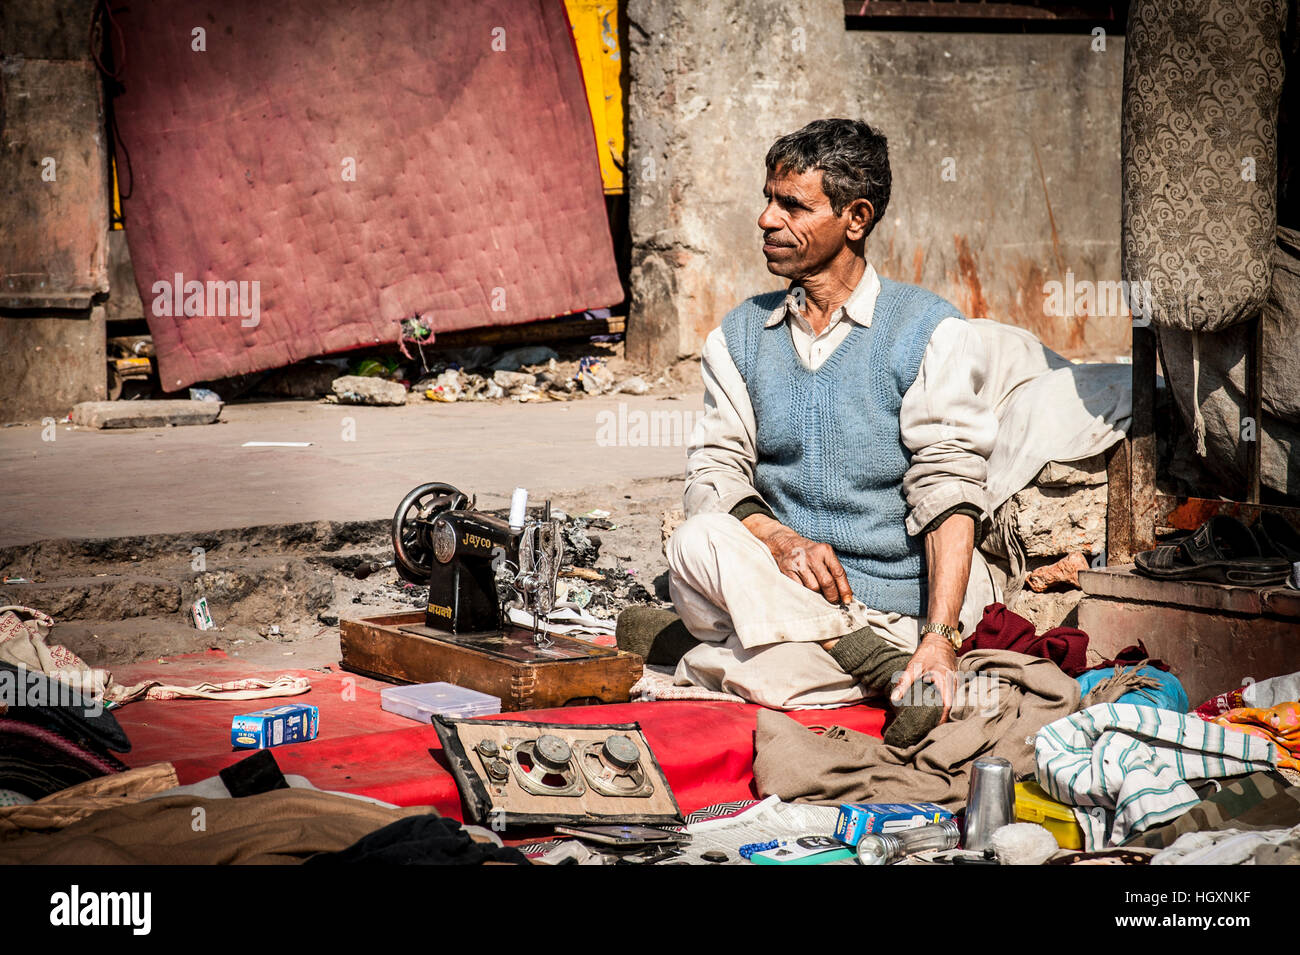 Street hawker / repairman with sewing machine and wares in slum near Jama Masjid, Delhi Stock Photo